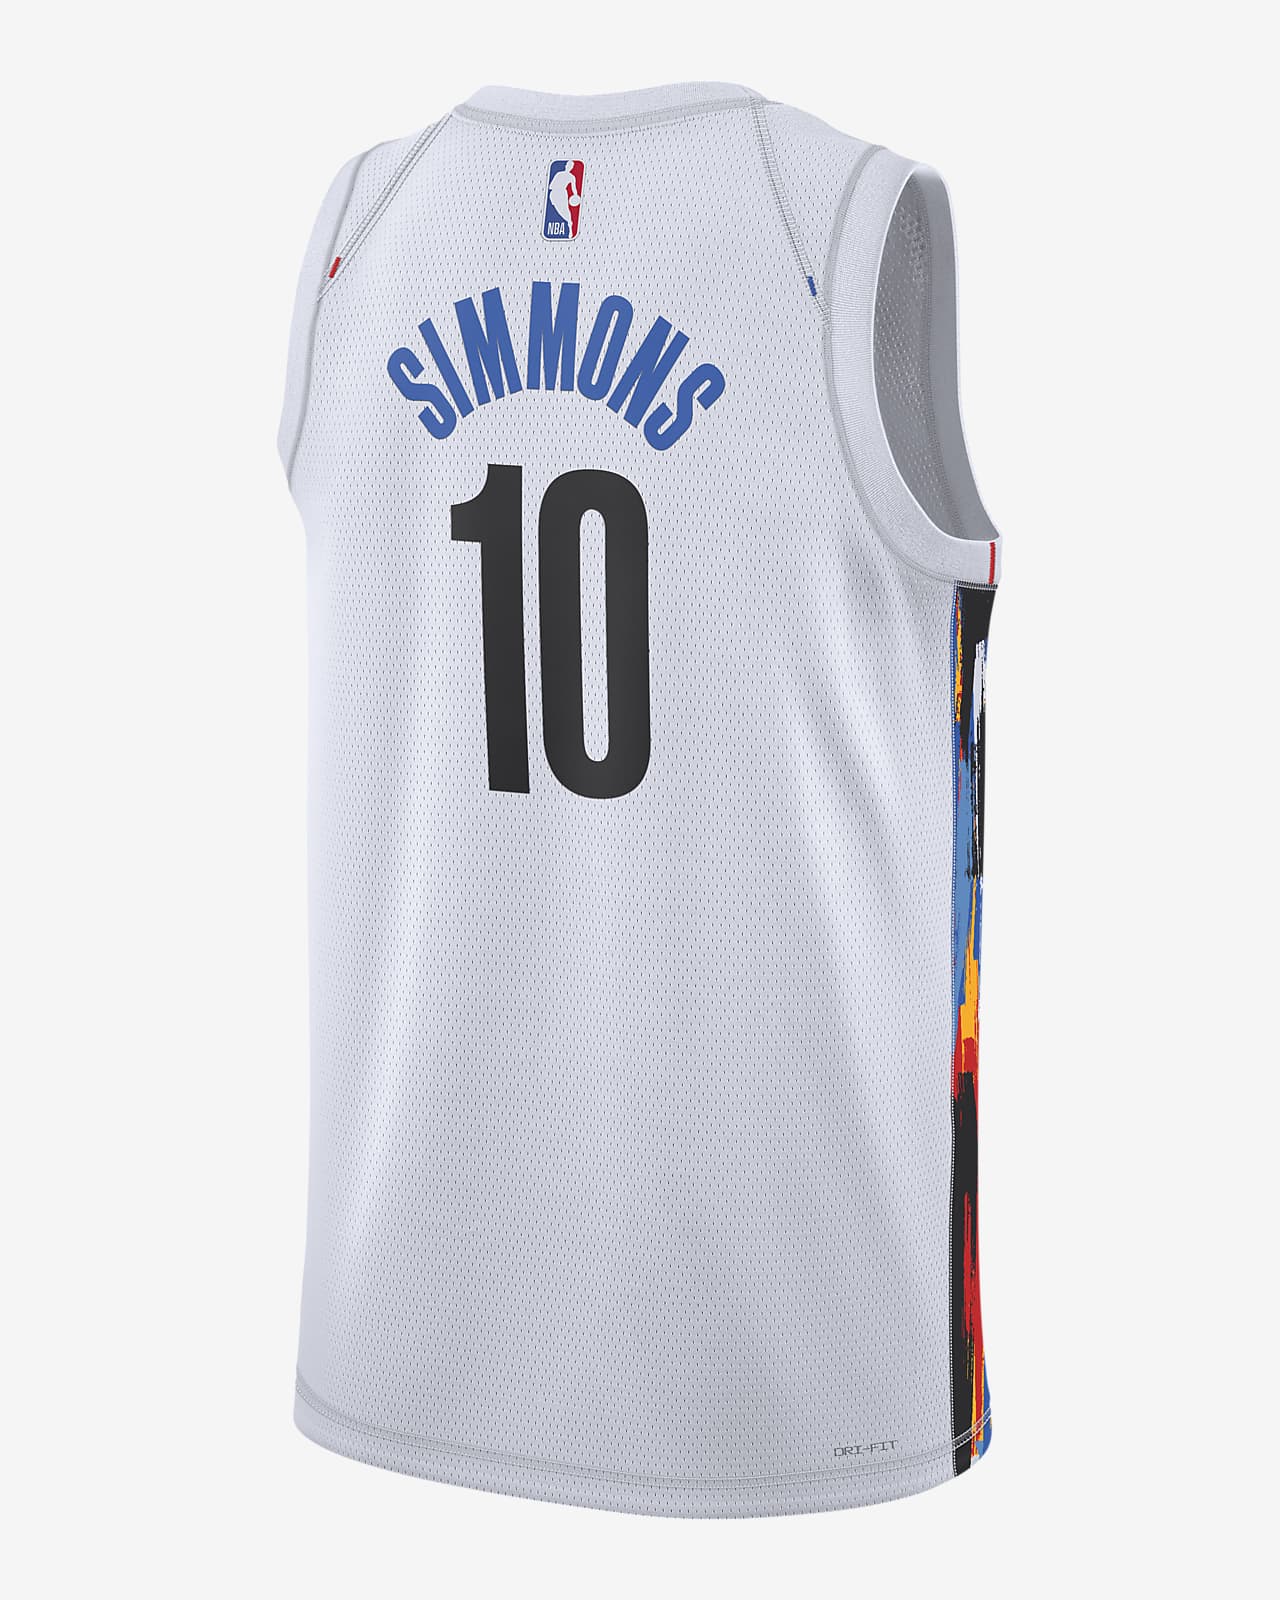 Jersey Dri-FIT Swingman de la NBA Ben Simmons Edition. Nike.com